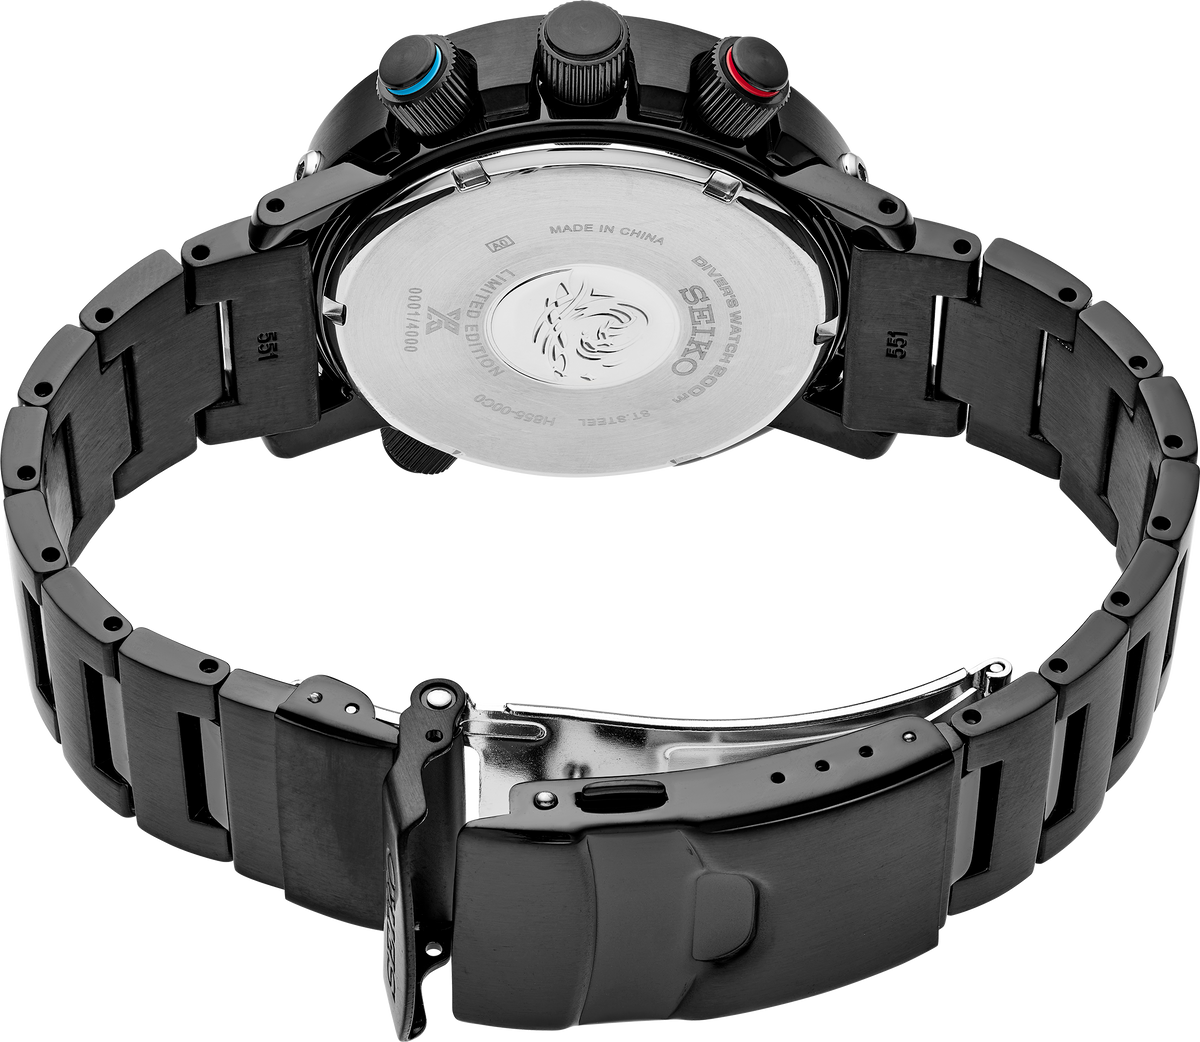 Seiko SNJ037 Prospex Solar Analog-Digital Diver's Watch Limited Edition Watch